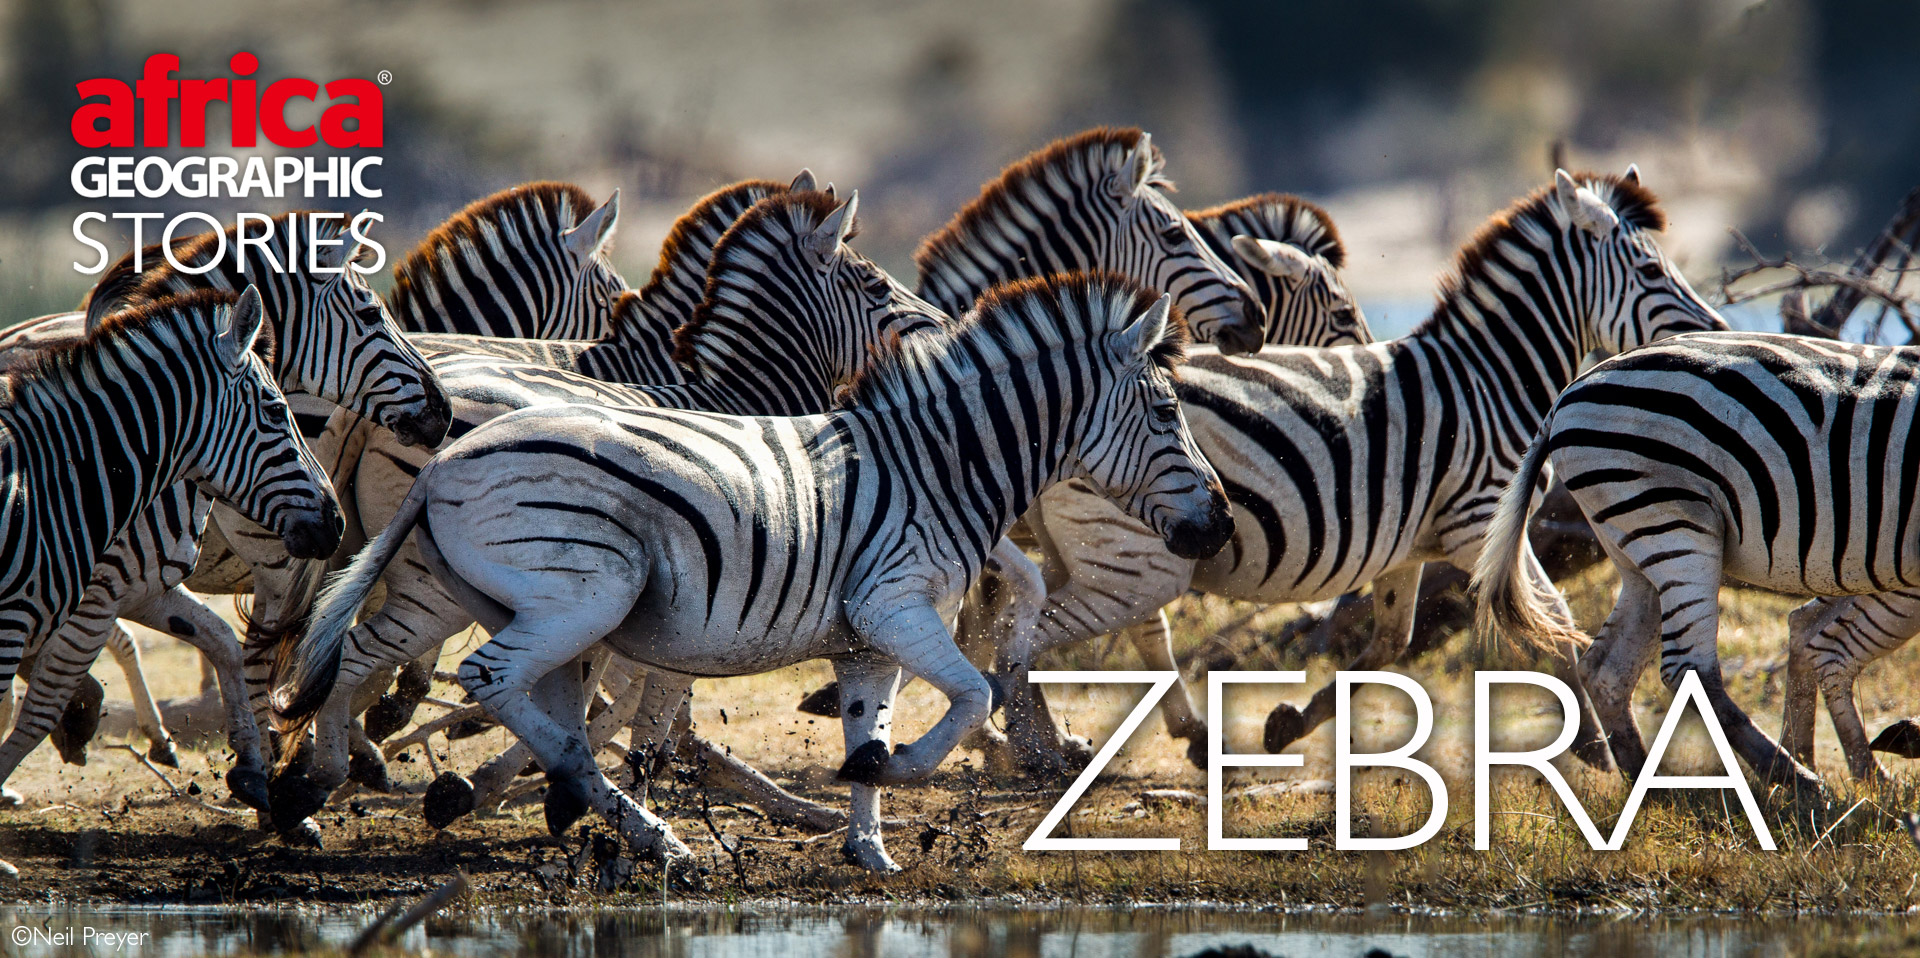 Zebra - Africa Geographic